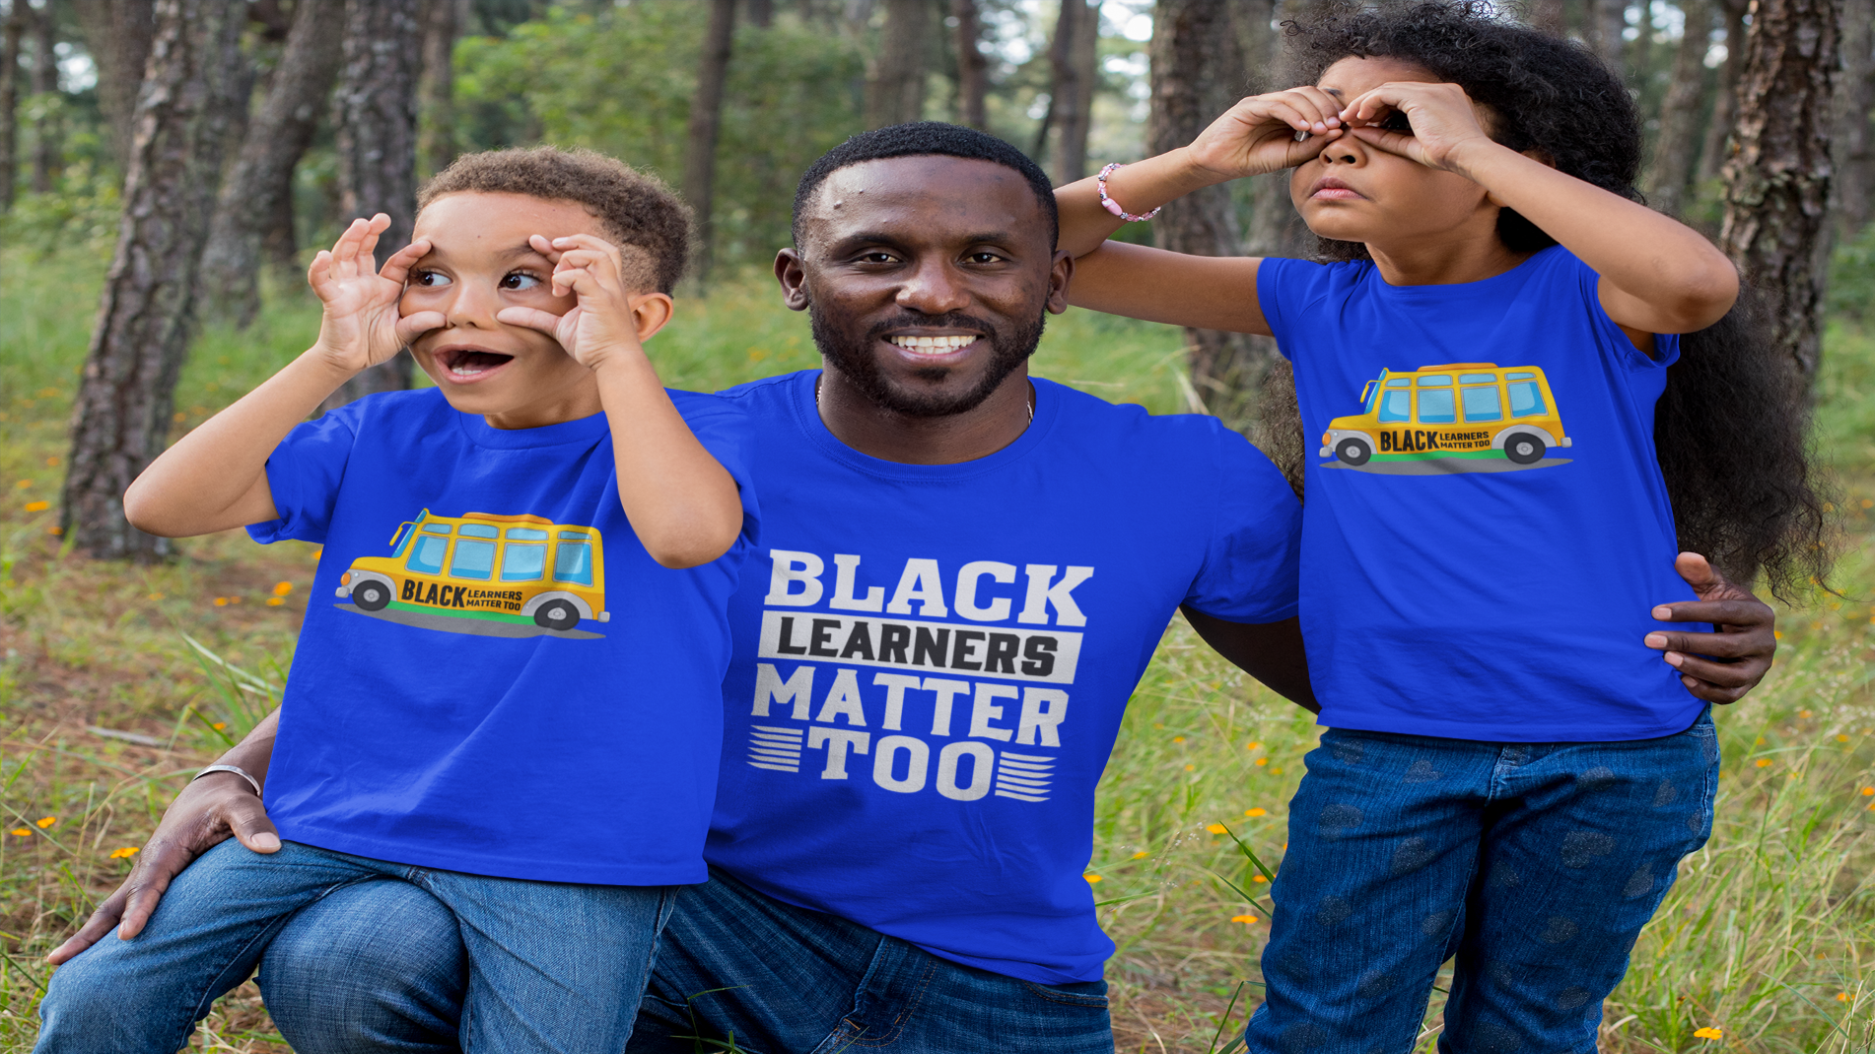 Black Learners Matter Too